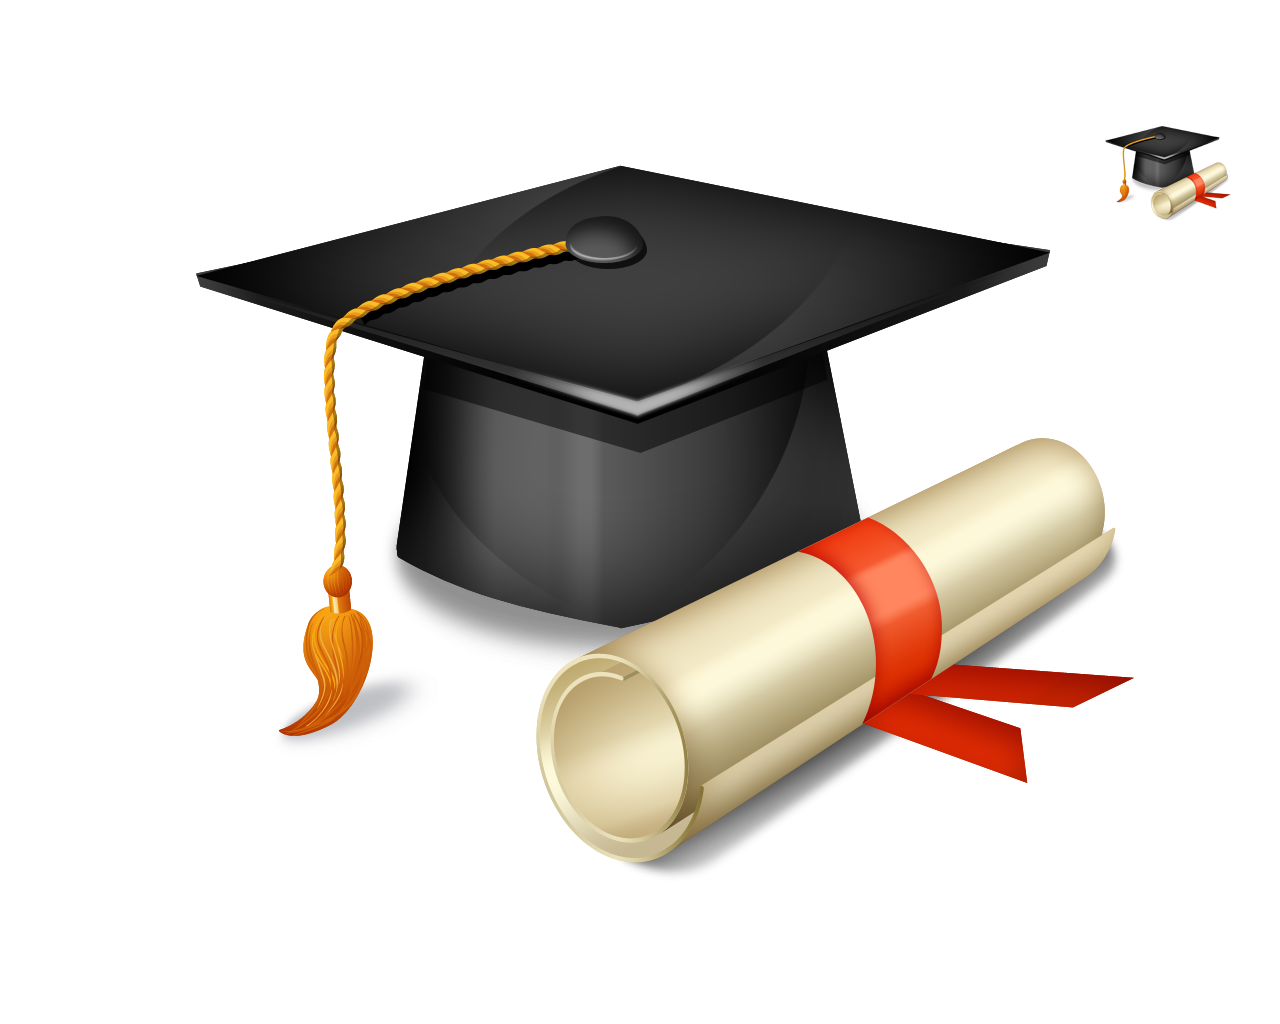 graduate clipart master's degree